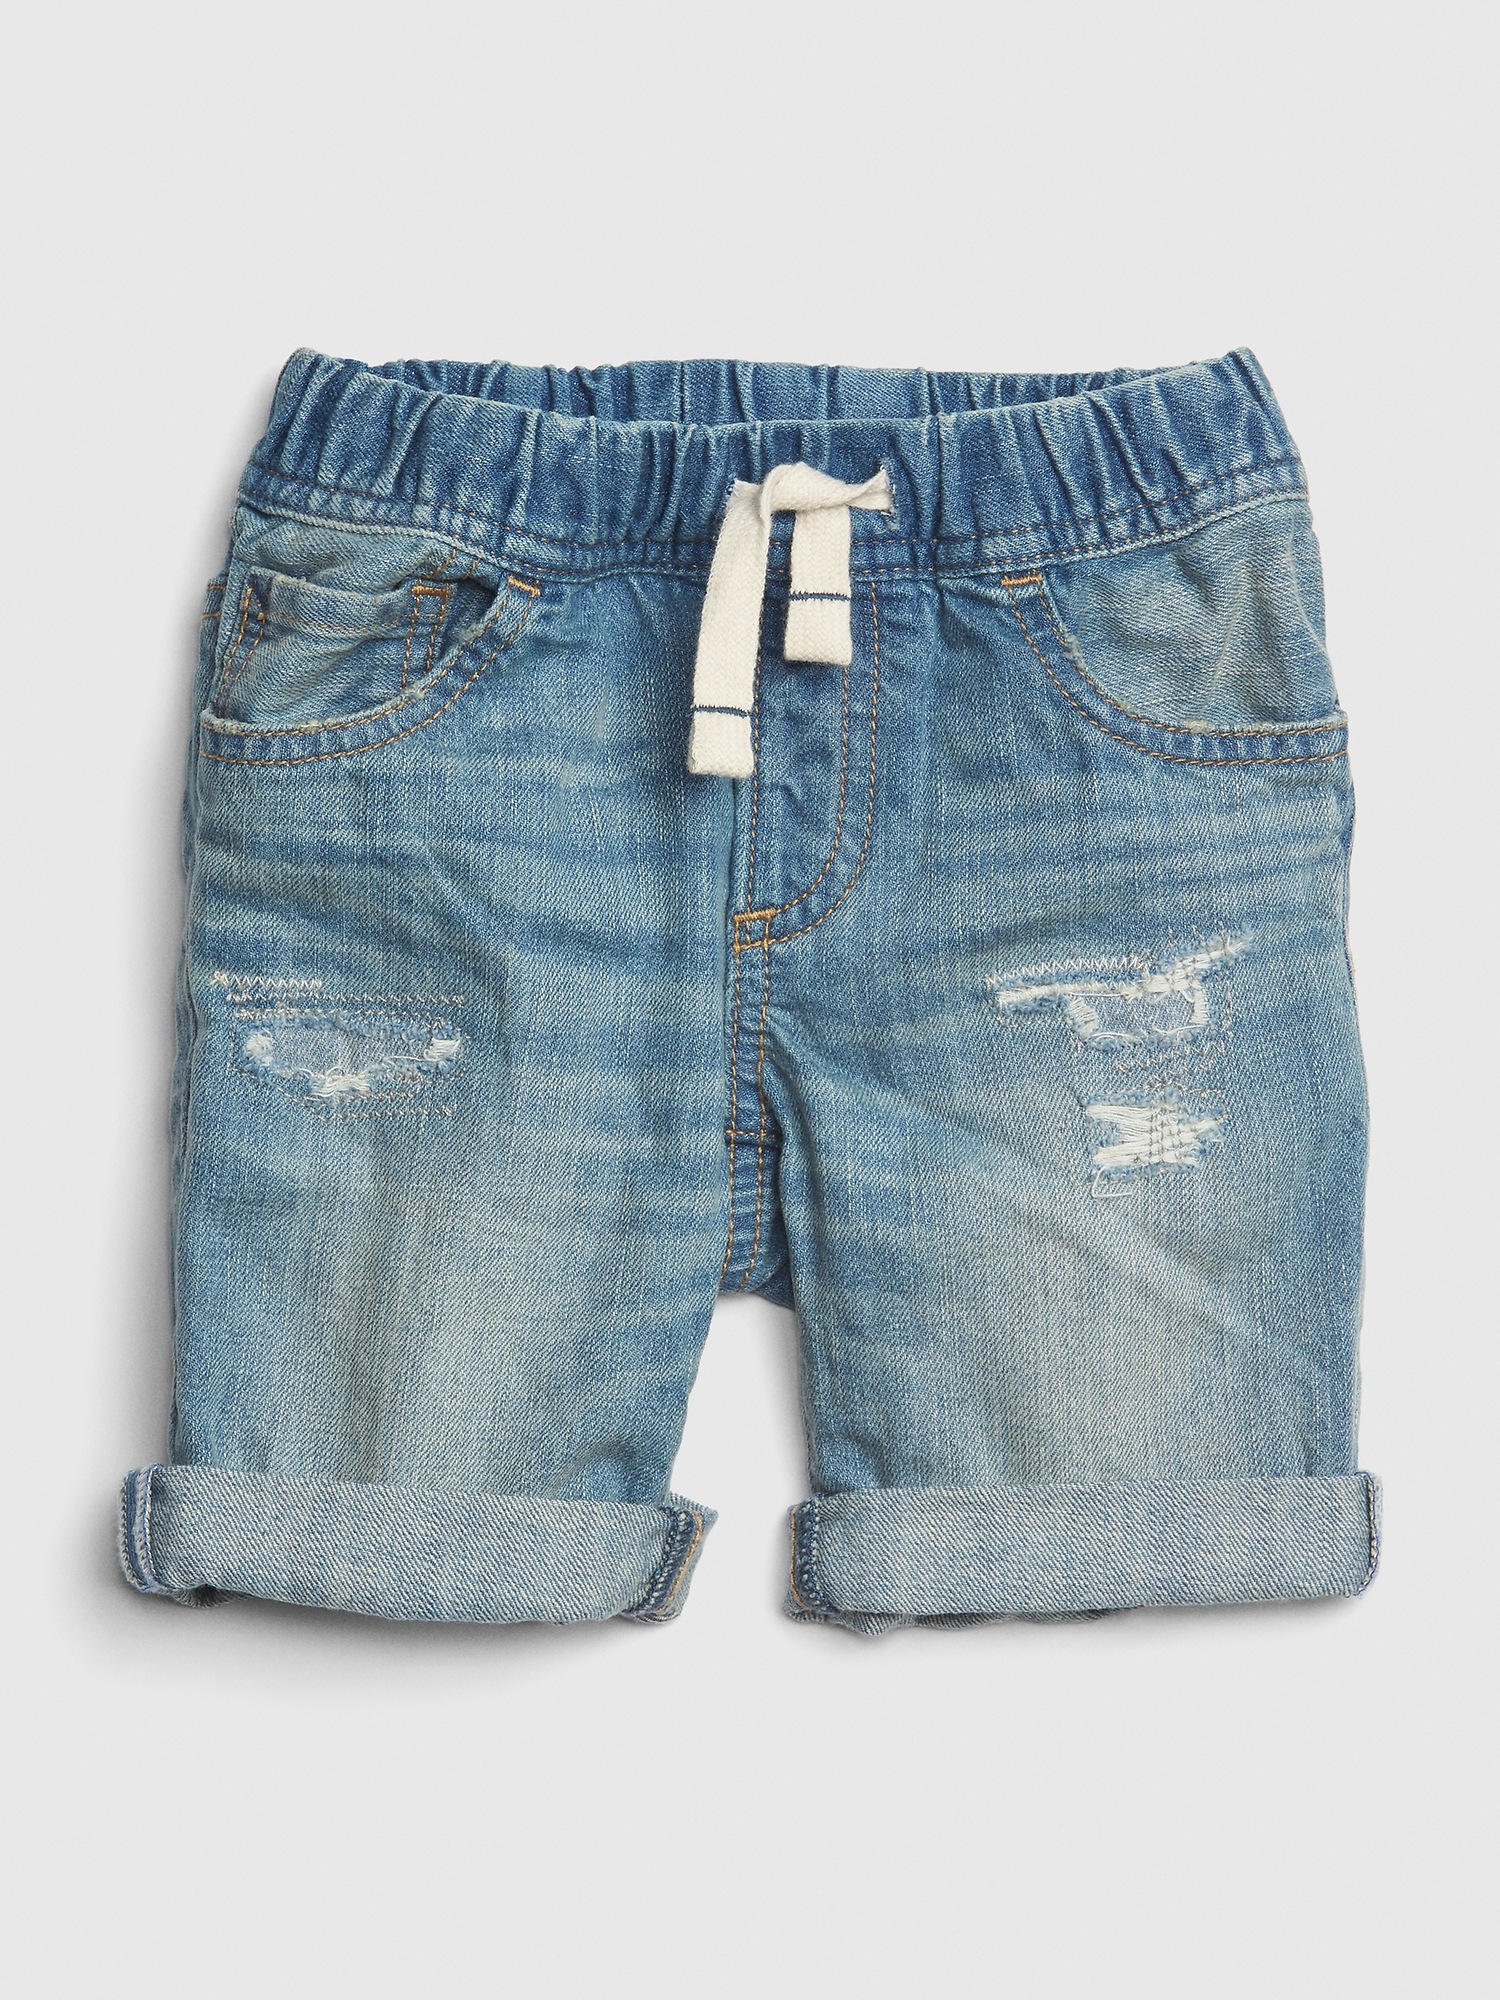 patch repair denim shorts